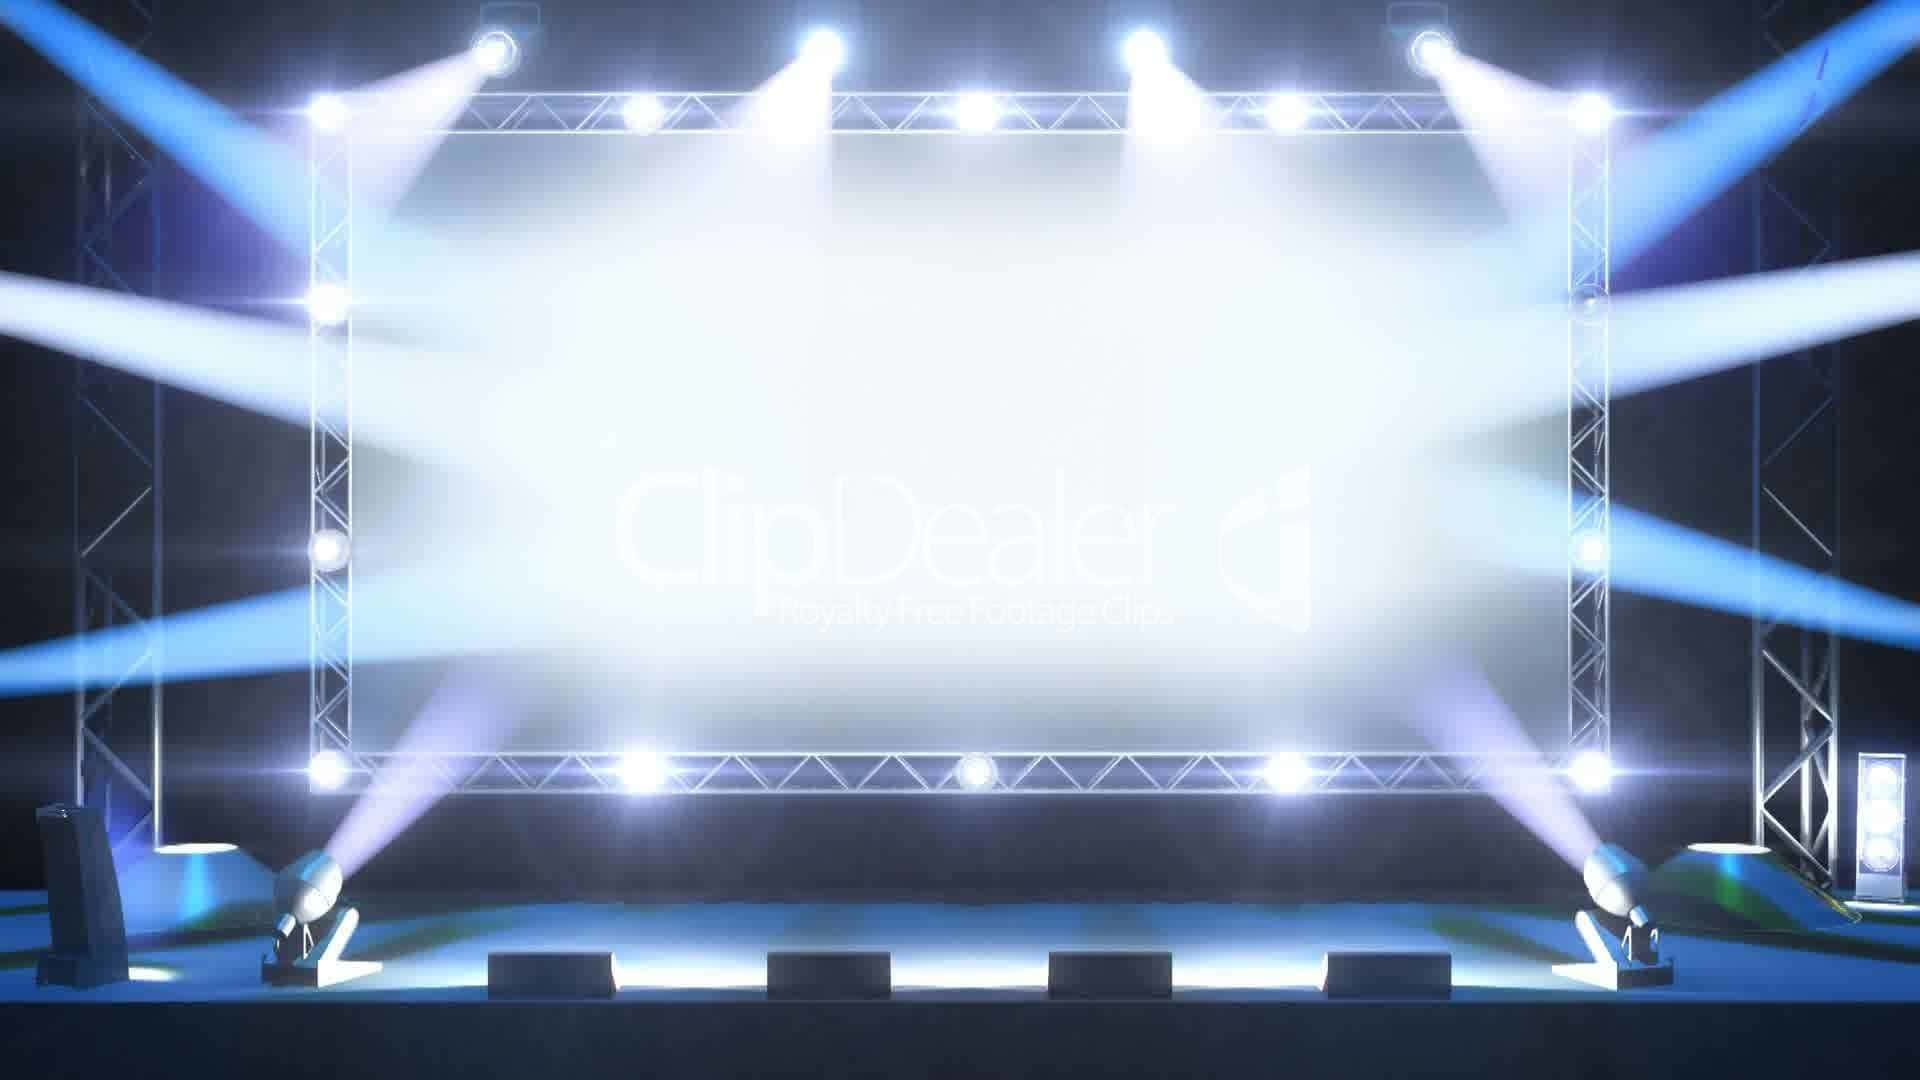 Stage Lights For Concert Event Wallpaper